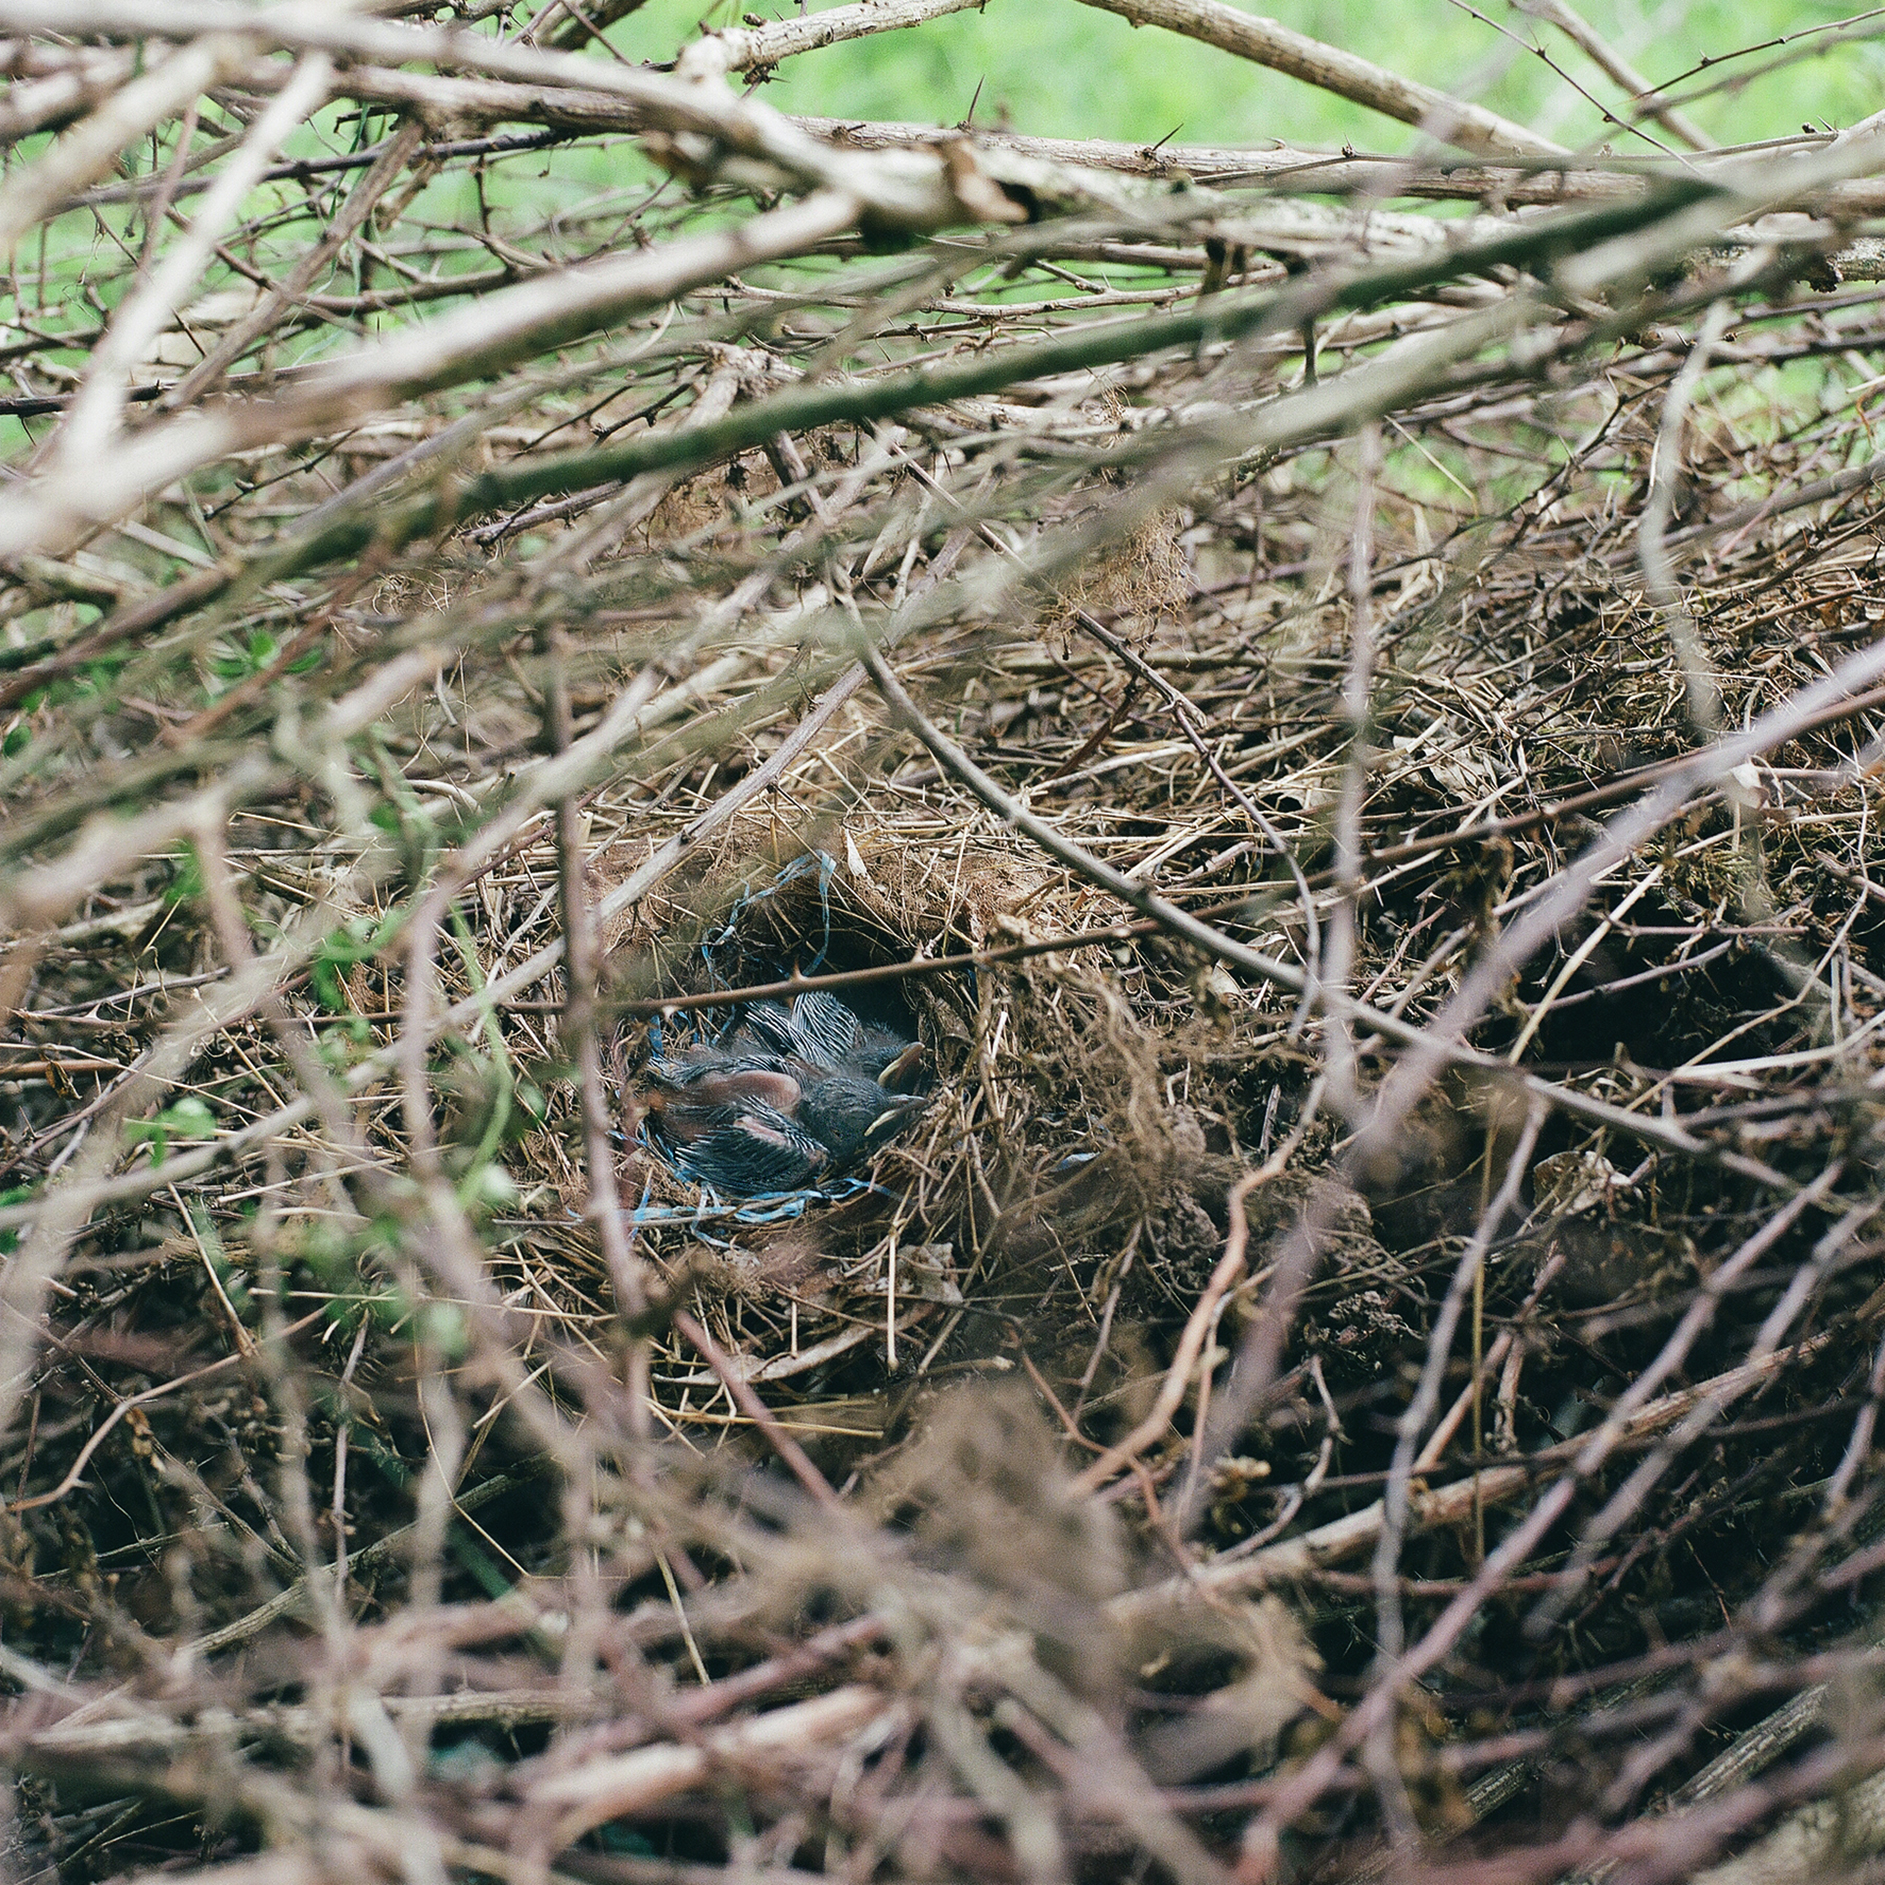 Shoshana Fink '22, "The Nest"